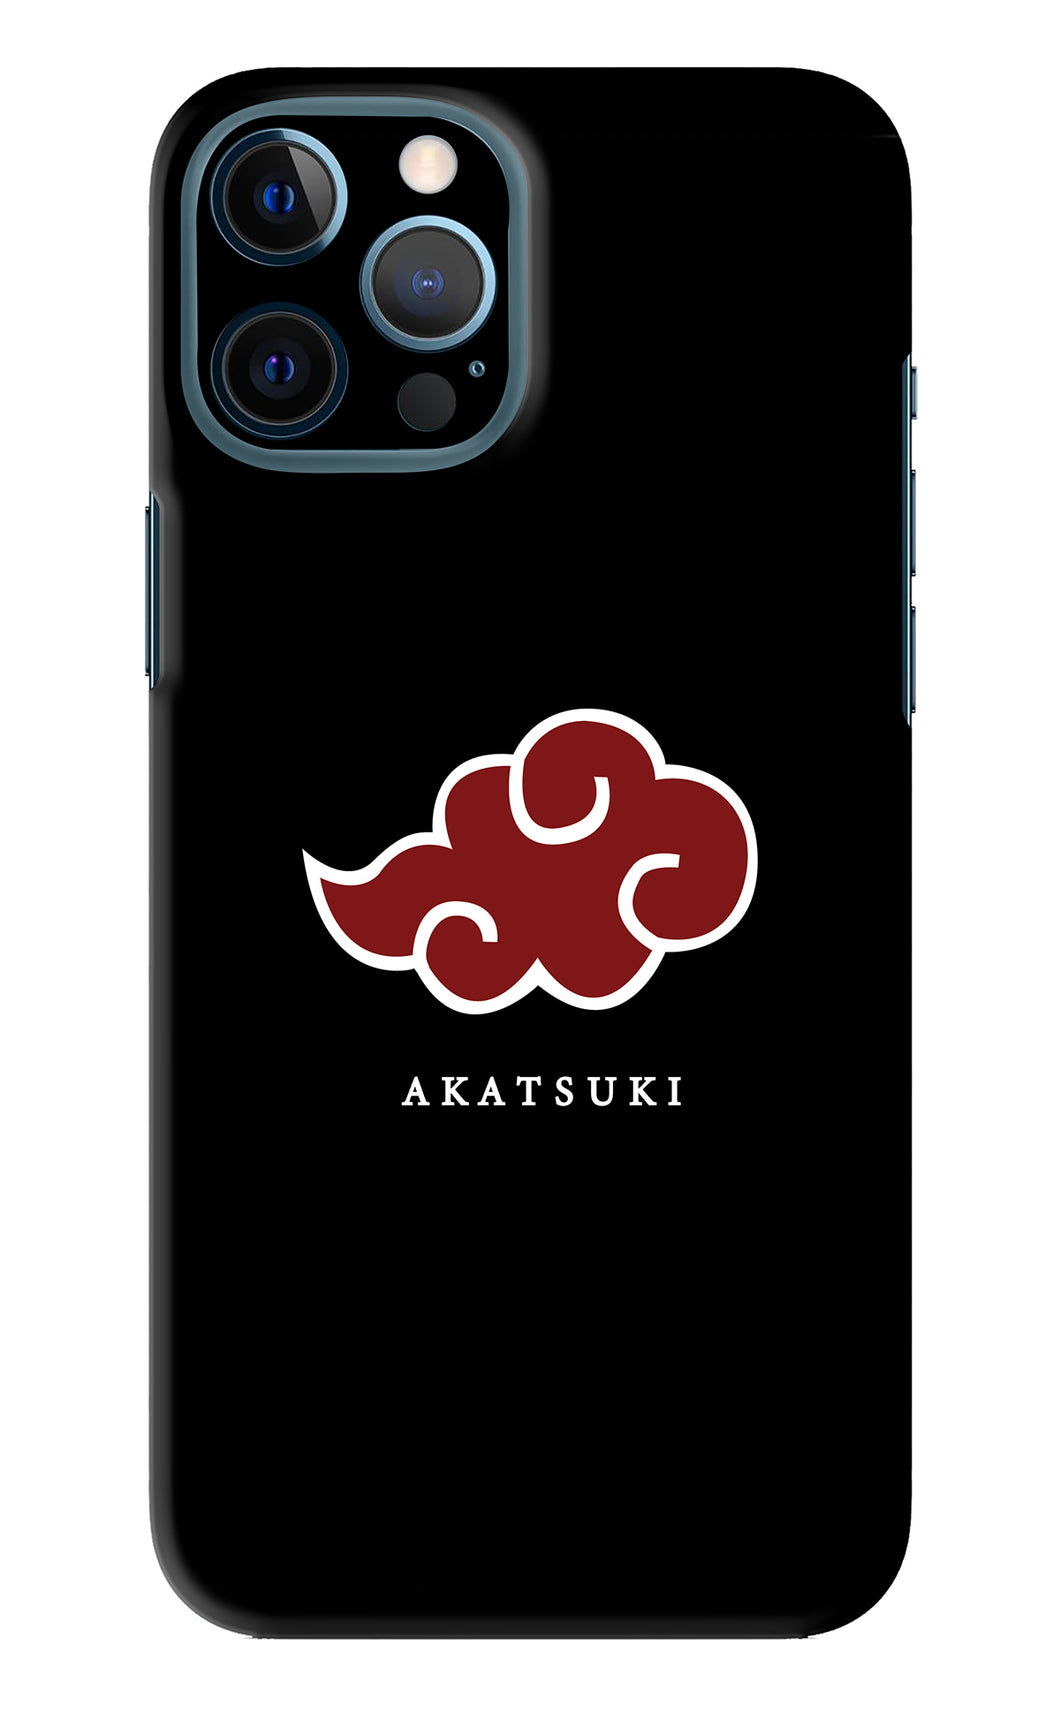 Akatsuki 1 iPhone 12 Pro Max Back Skin Wrap